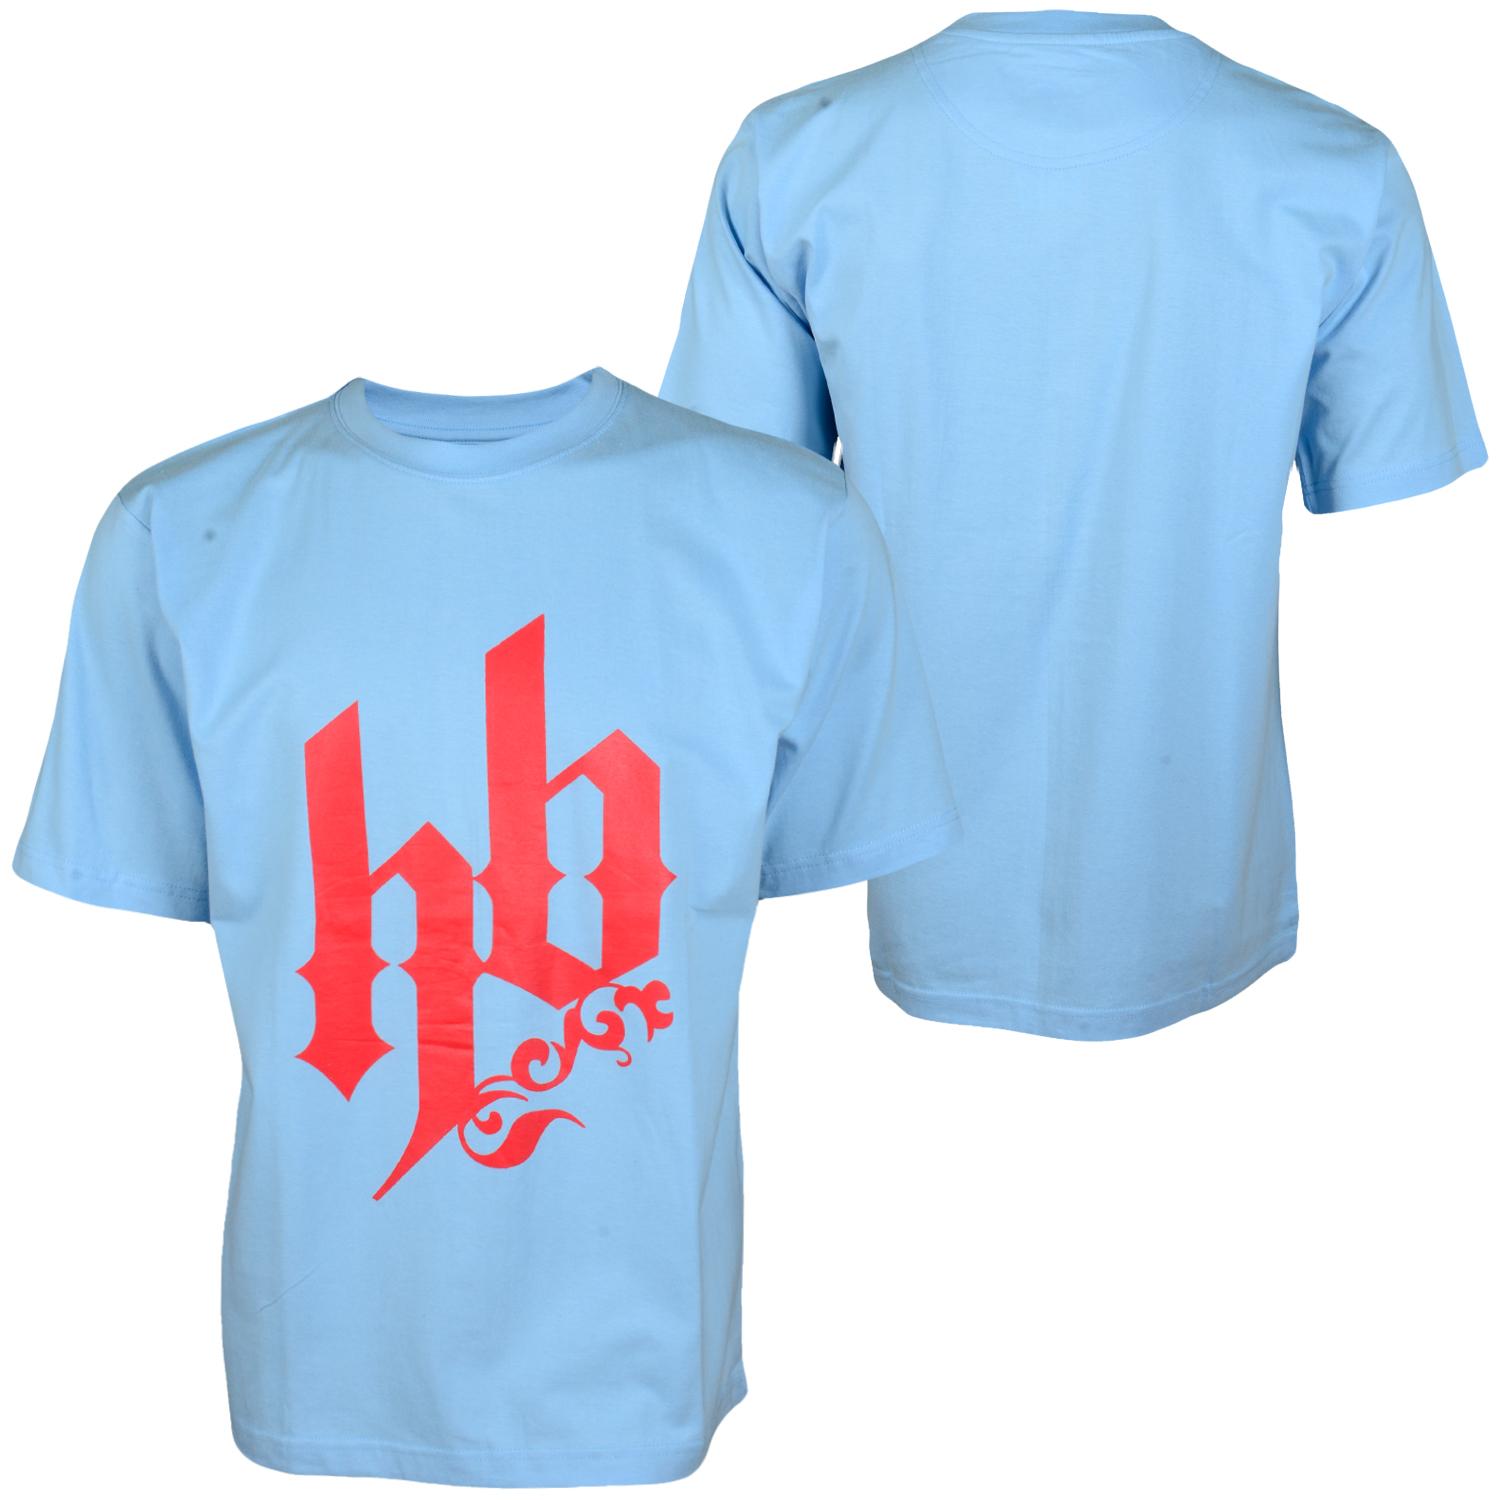 Foto Hoodboyz Basic Front Hb Logo Camisetas Azul Claro foto 257633